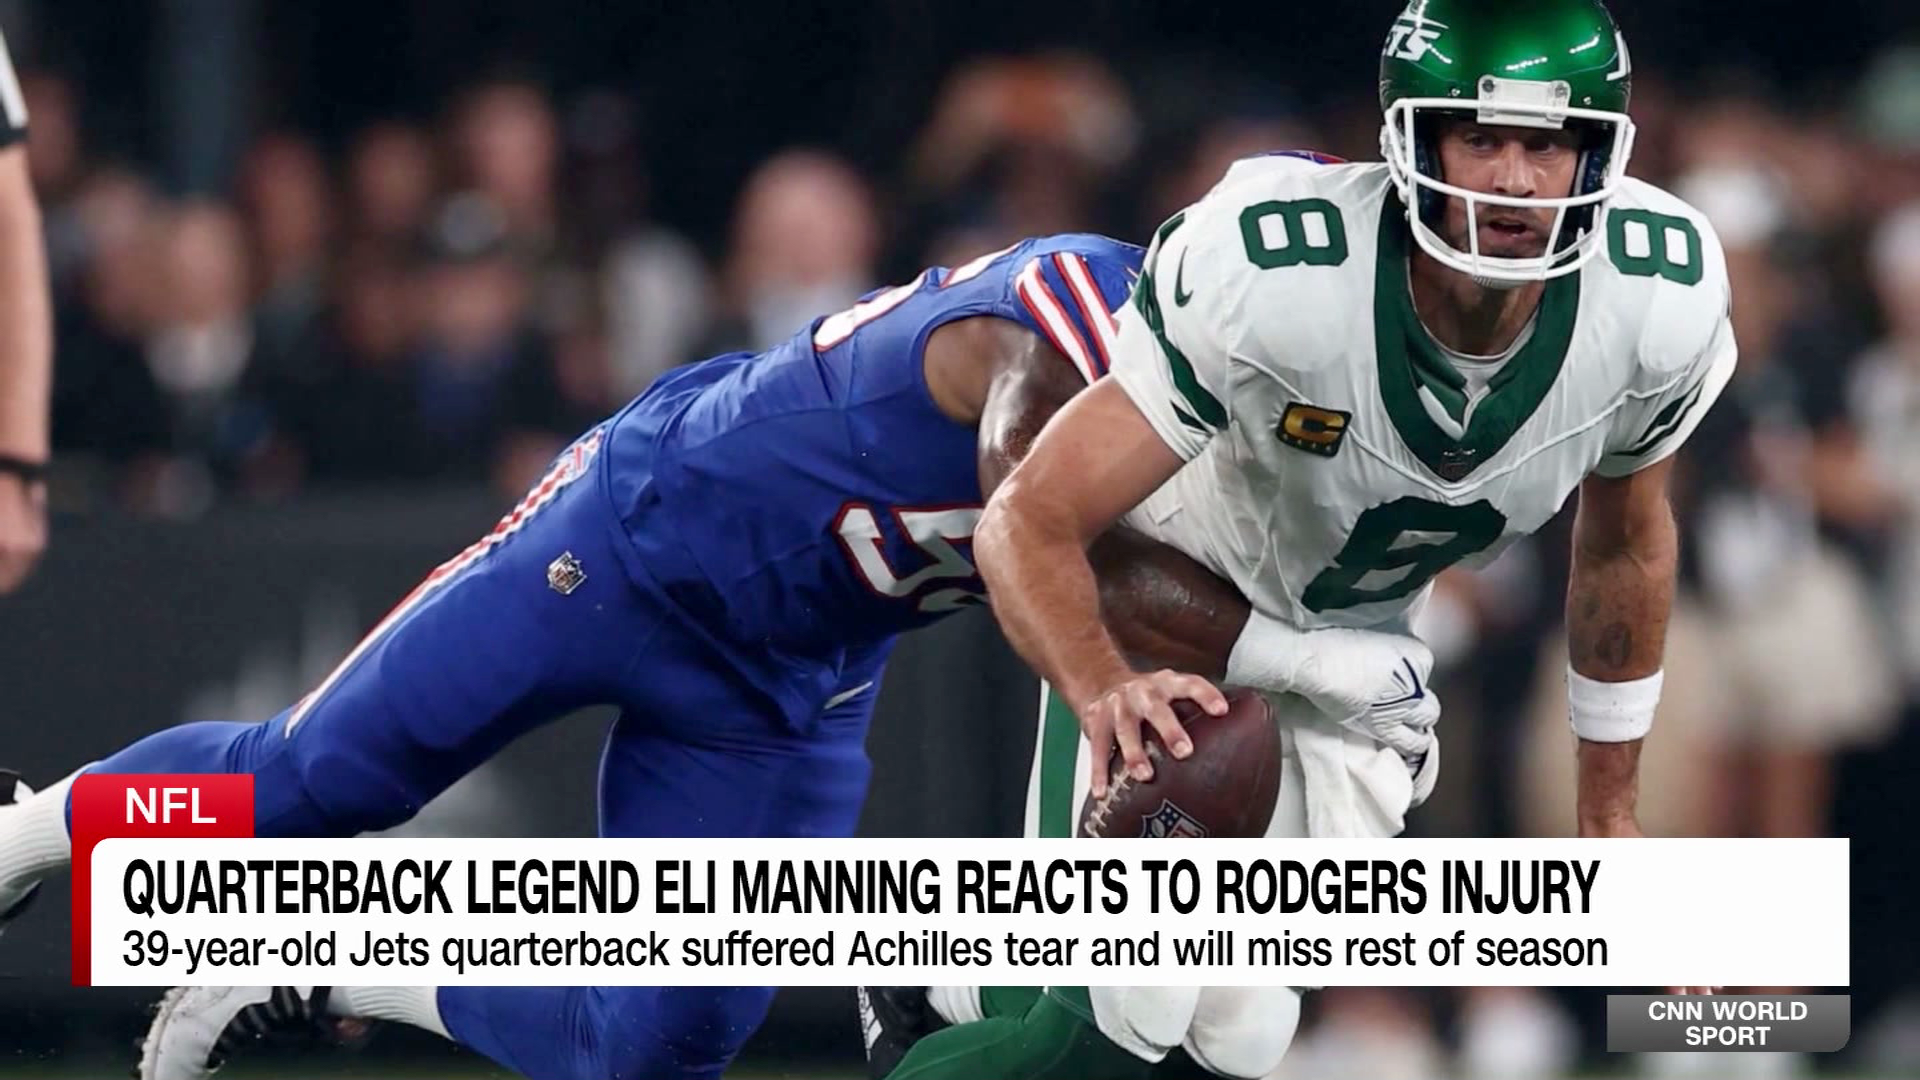 Eli Manning: The Making of a Quarterback